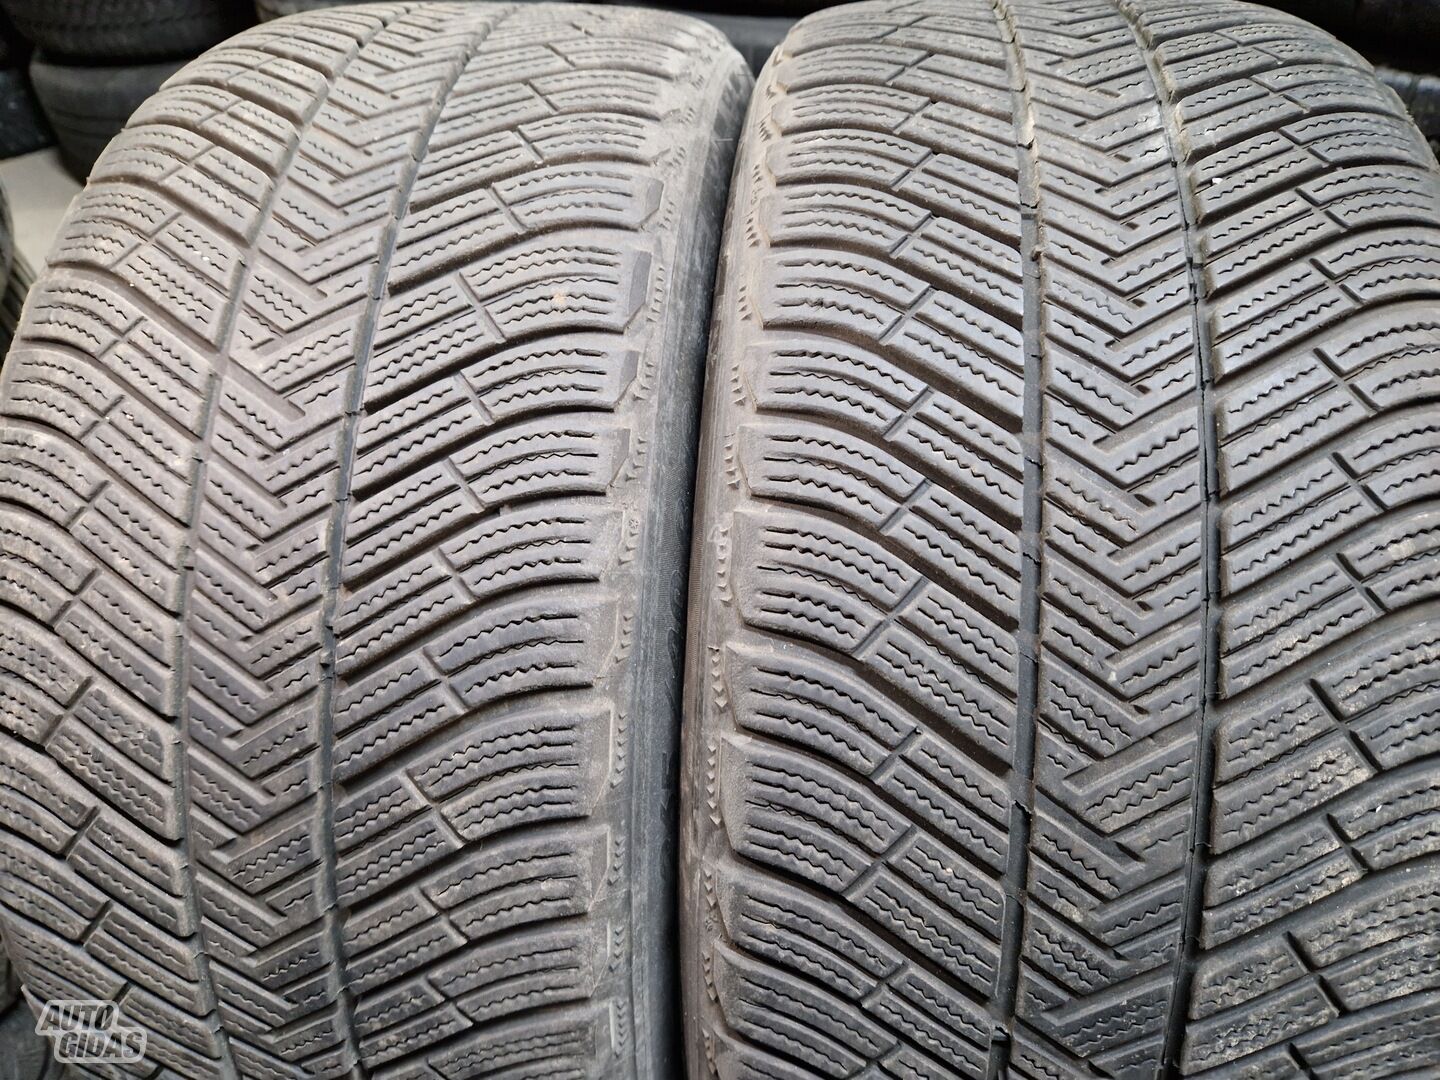 Michelin 6-7mm, 2018m R19 winter tyres passanger car